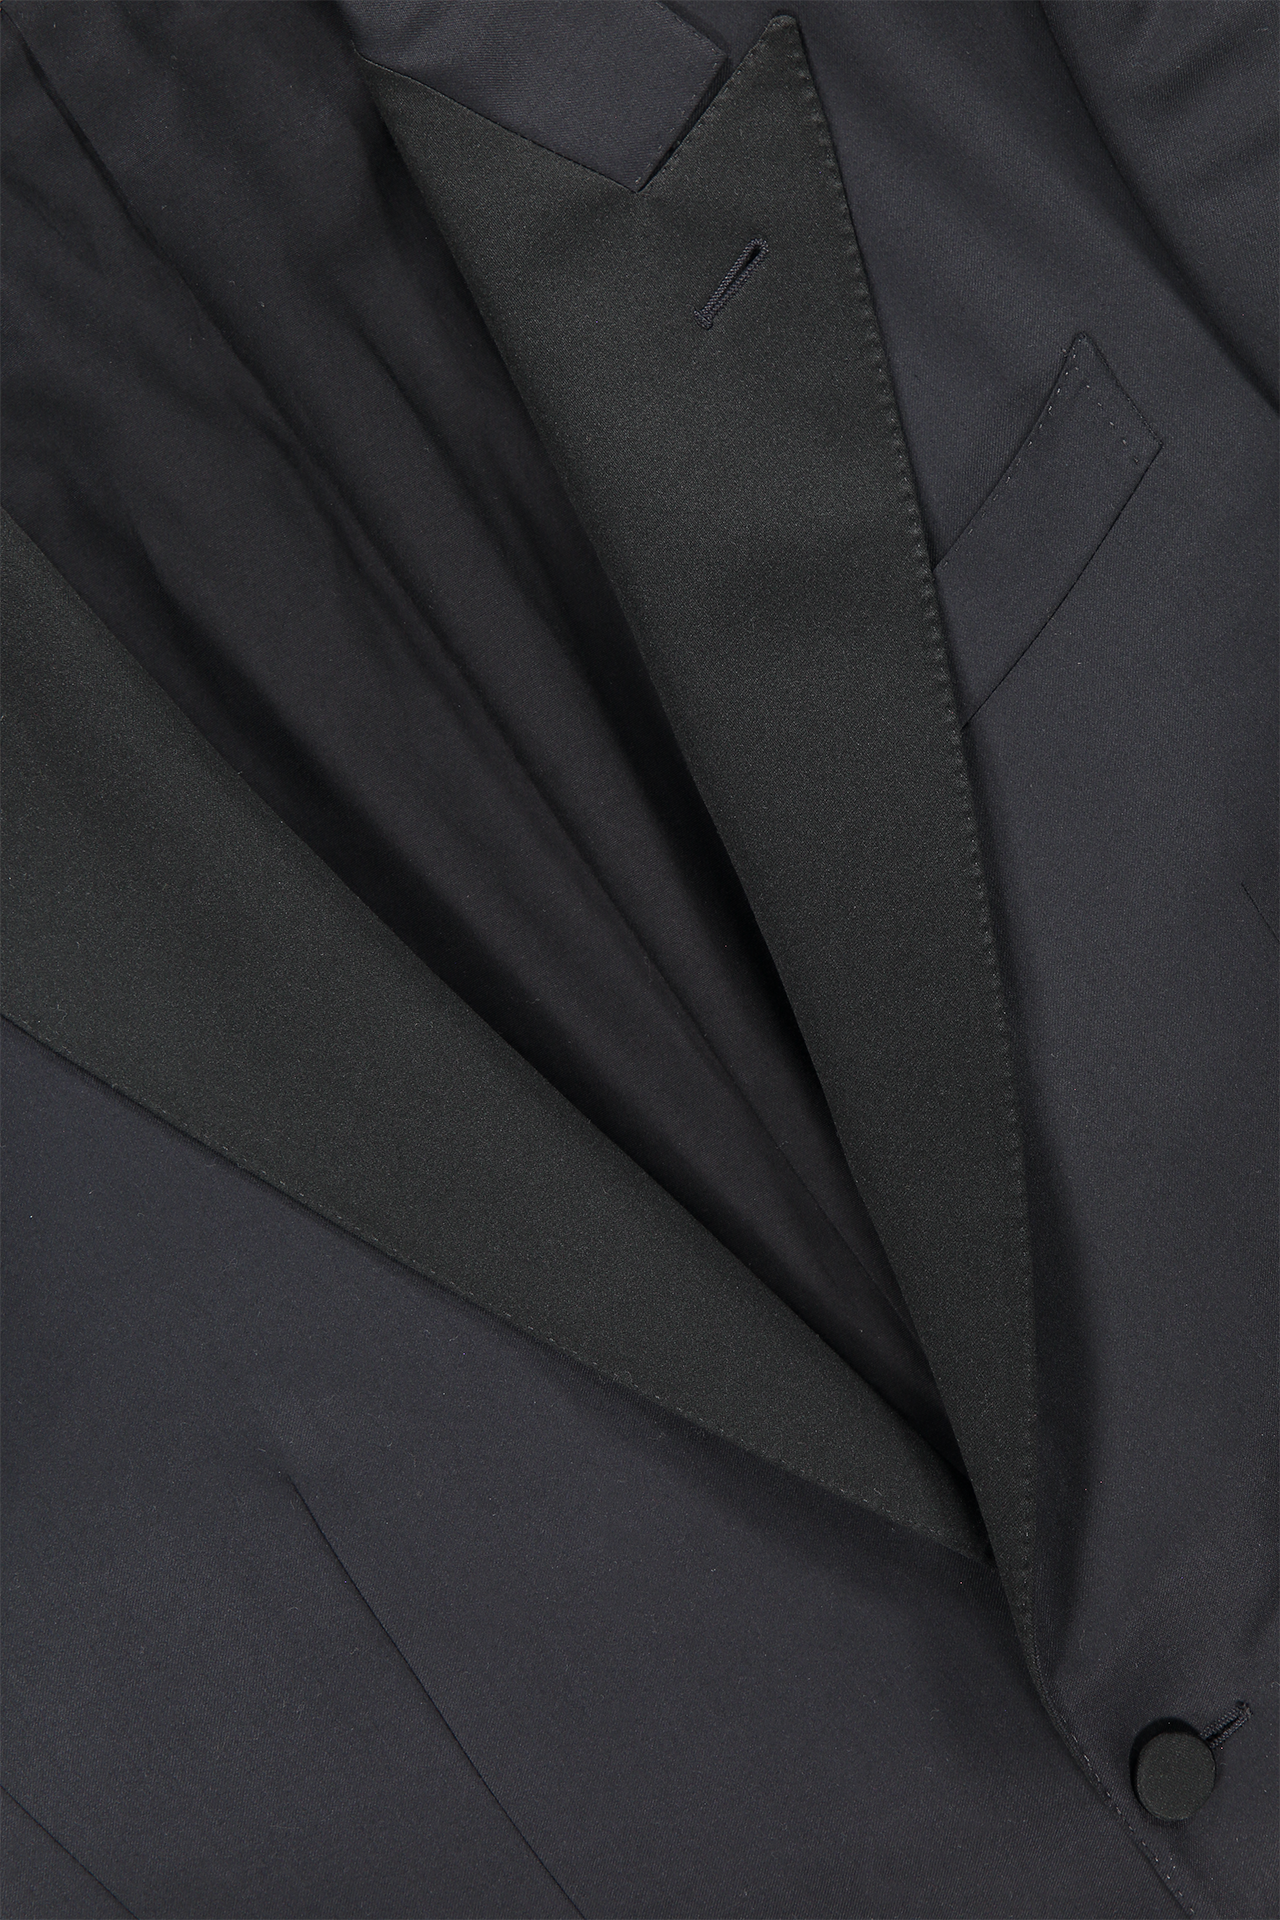 Zegna Micronsphere Tuxedo Black Collar Detail Image (4371186450547)